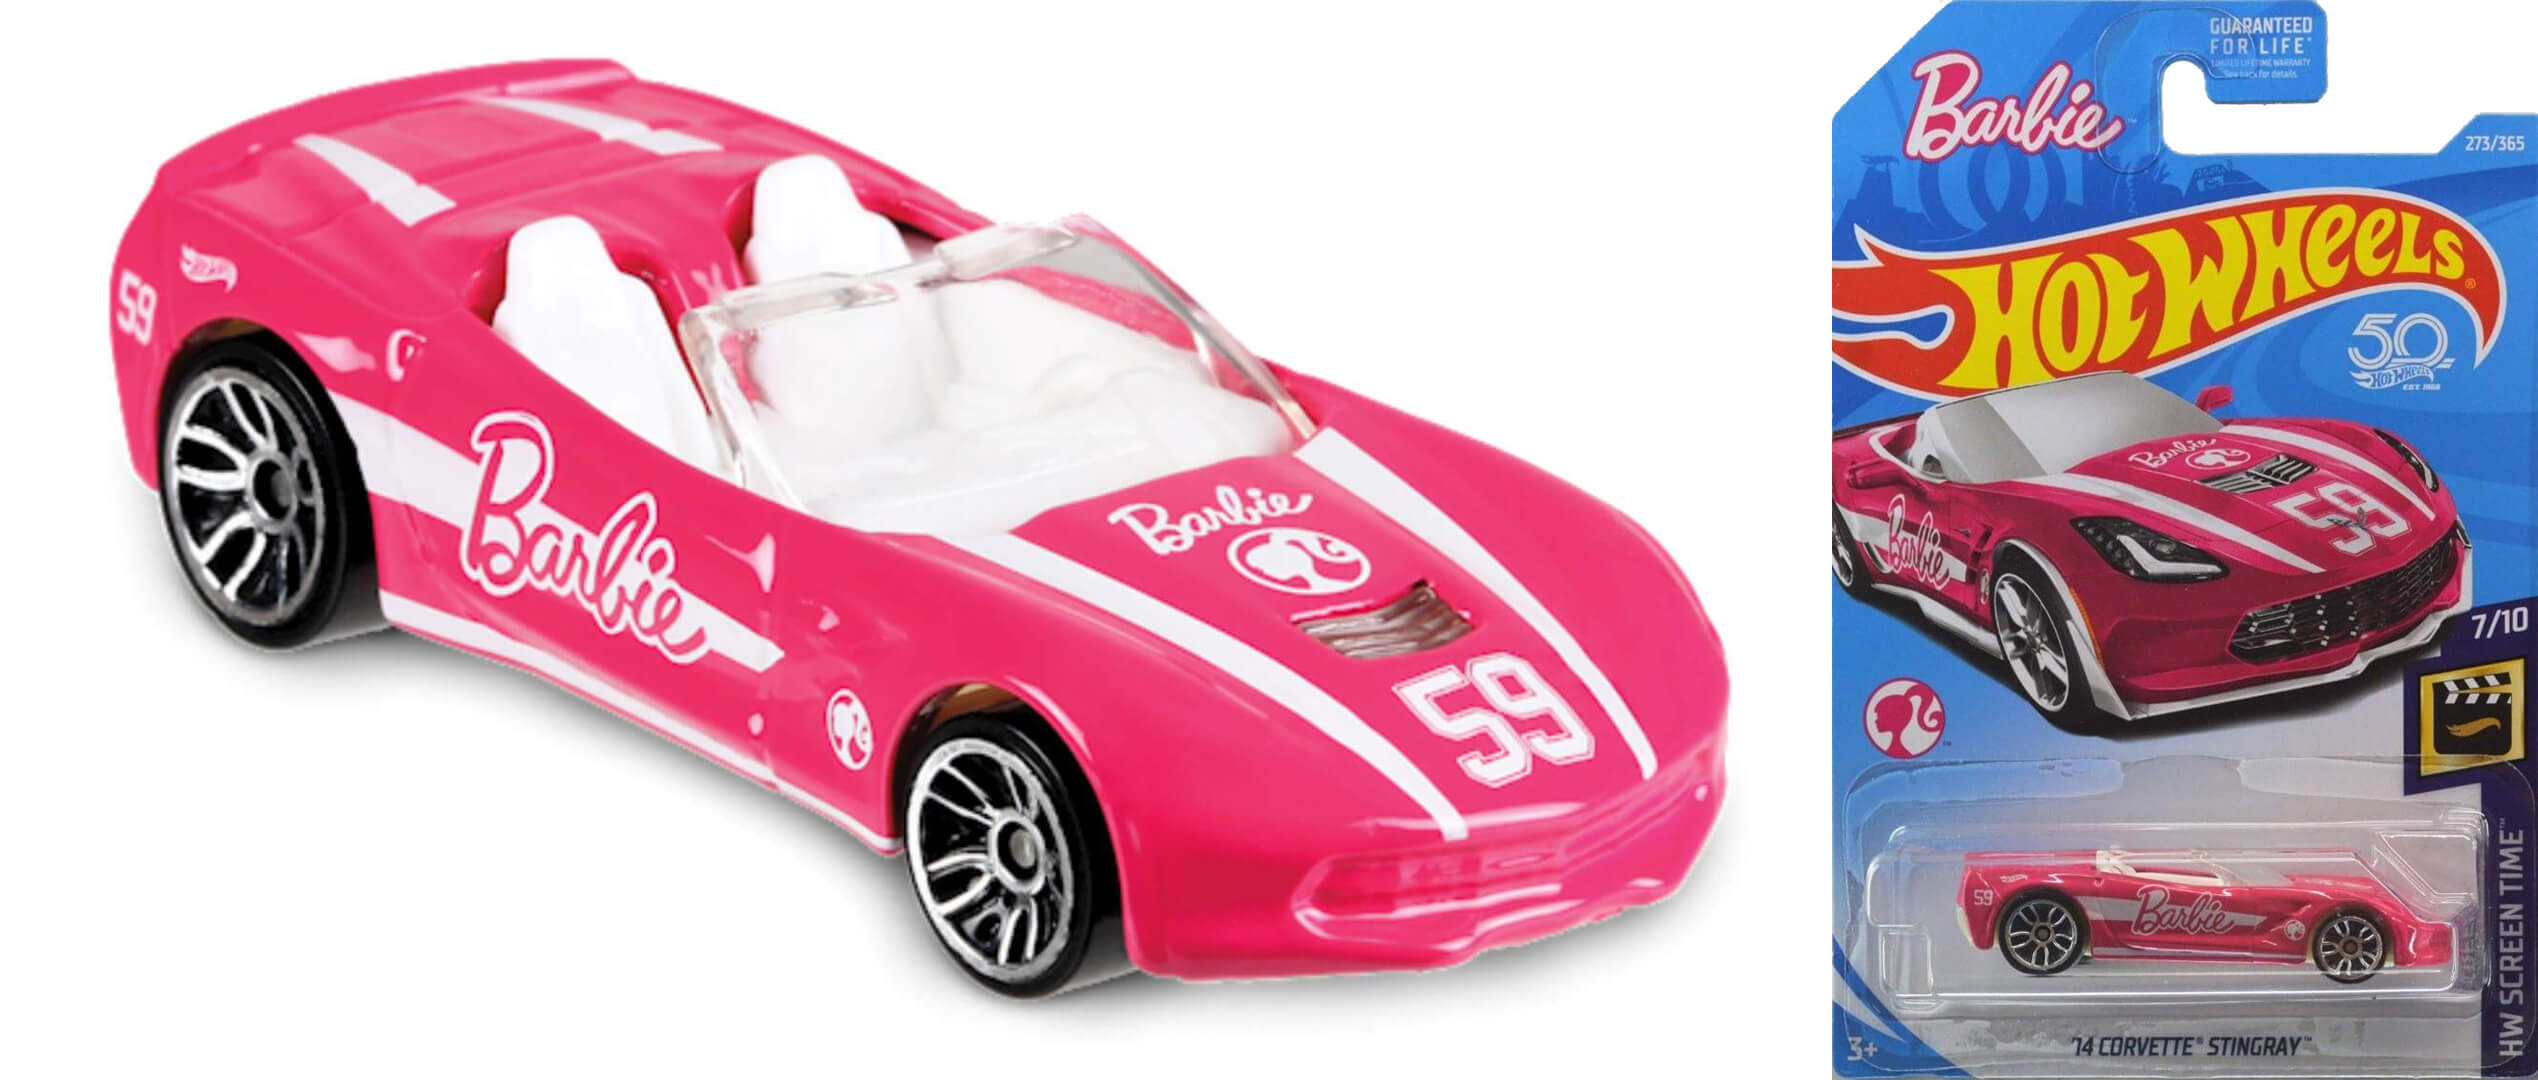 Moxxi Signature Pinky Skin - Barbie Corvette Hotwheels